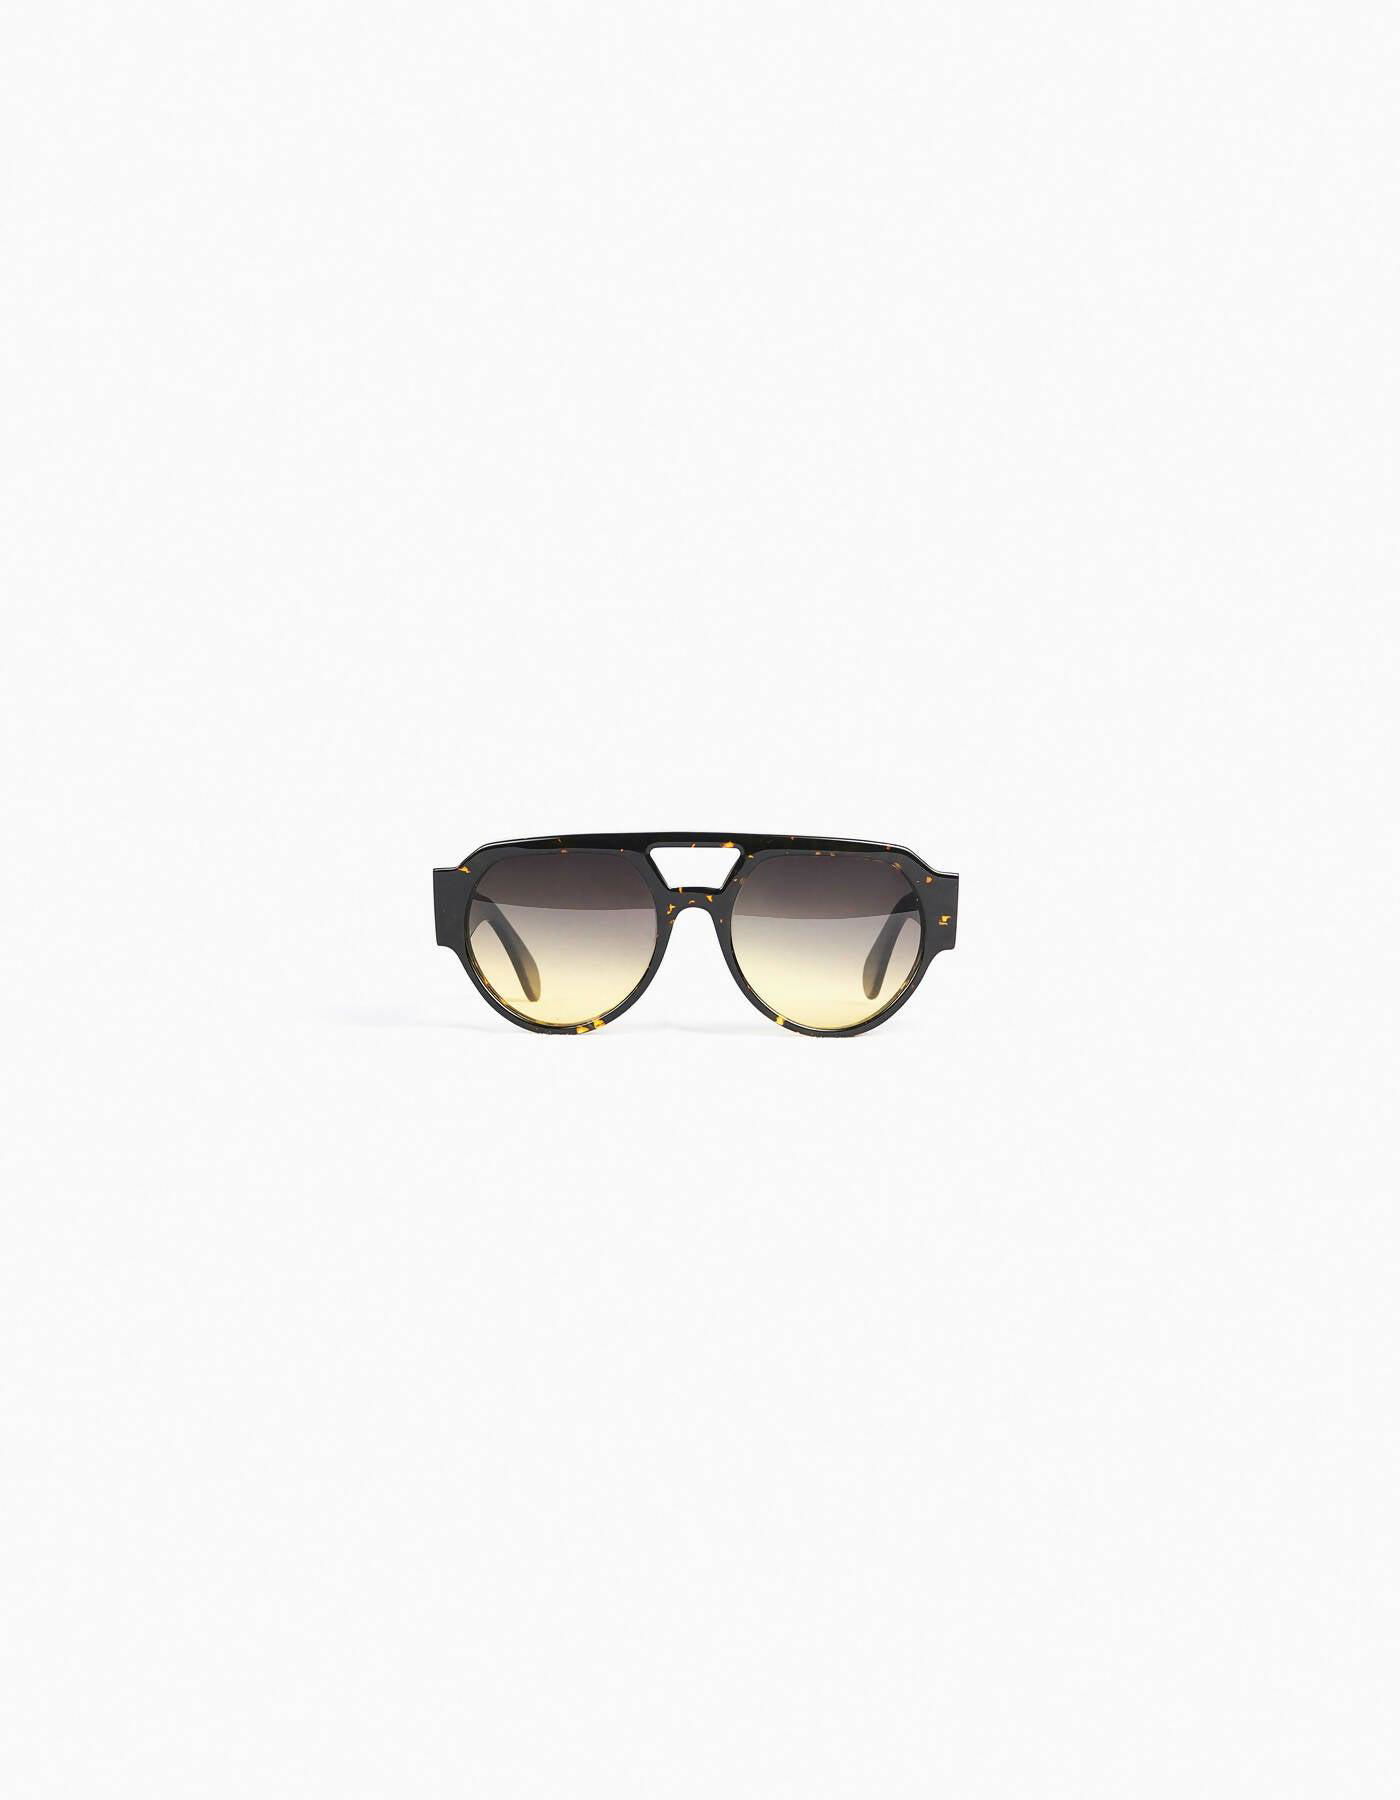 Zaha 2 Sunglasses by MERCADER